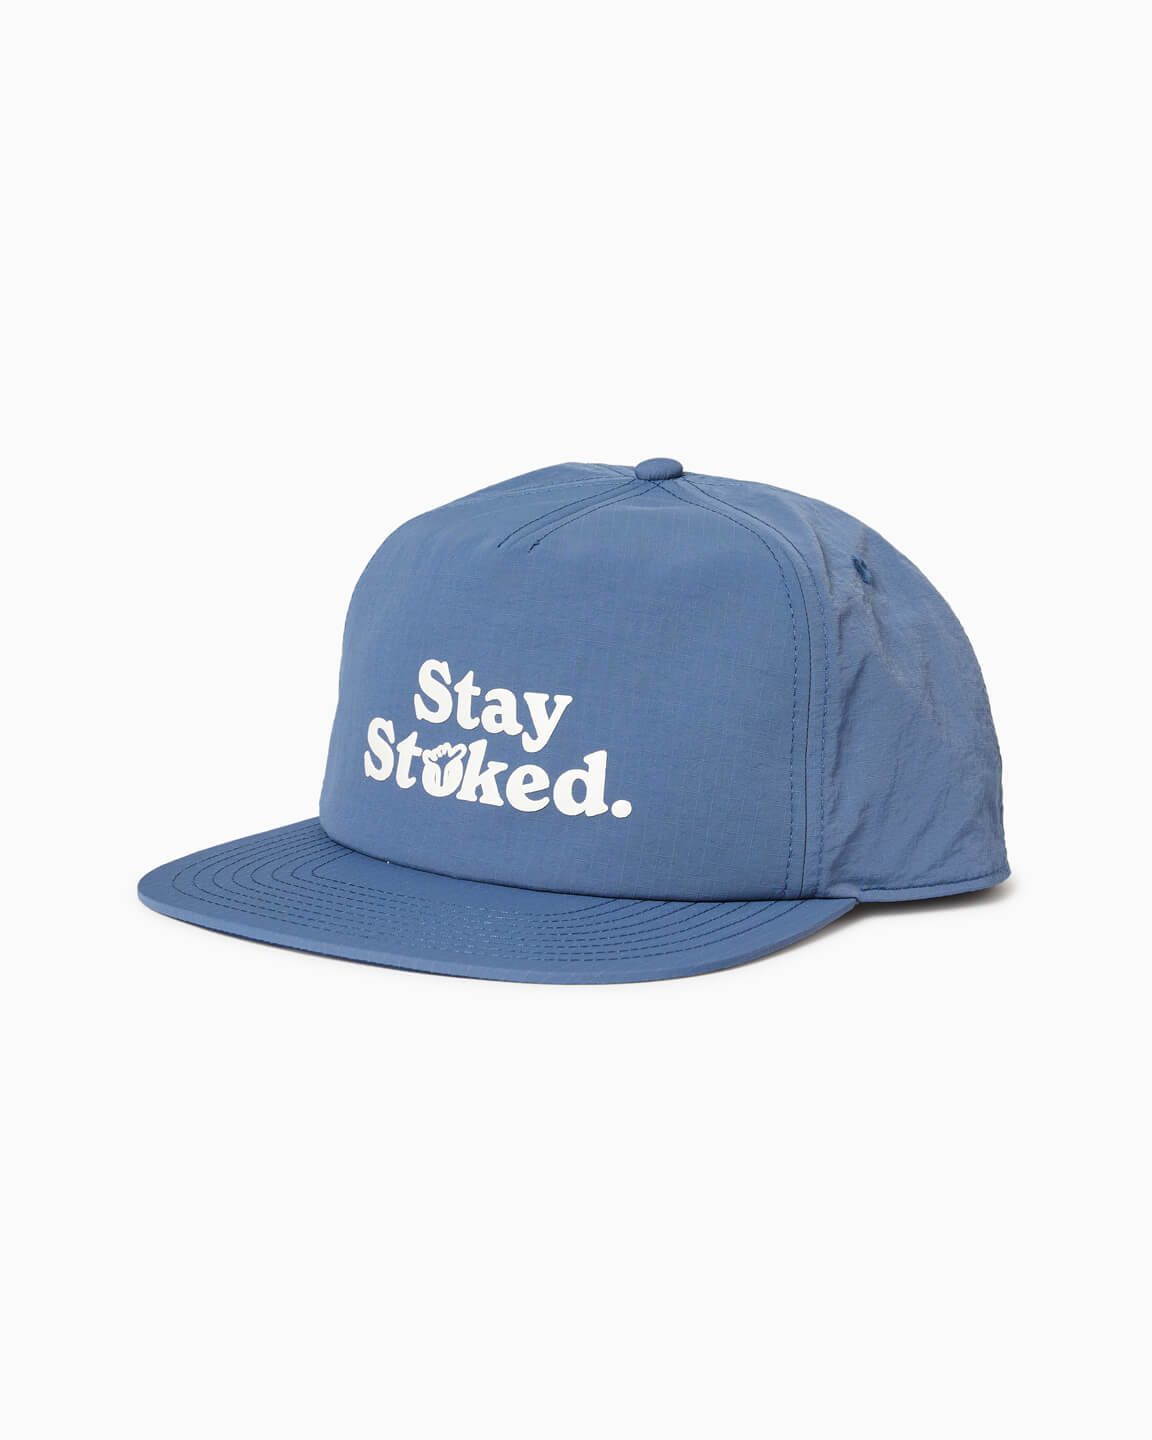 Men\'s Surf Hats - Flex-fit, Trucker, & Adjustable